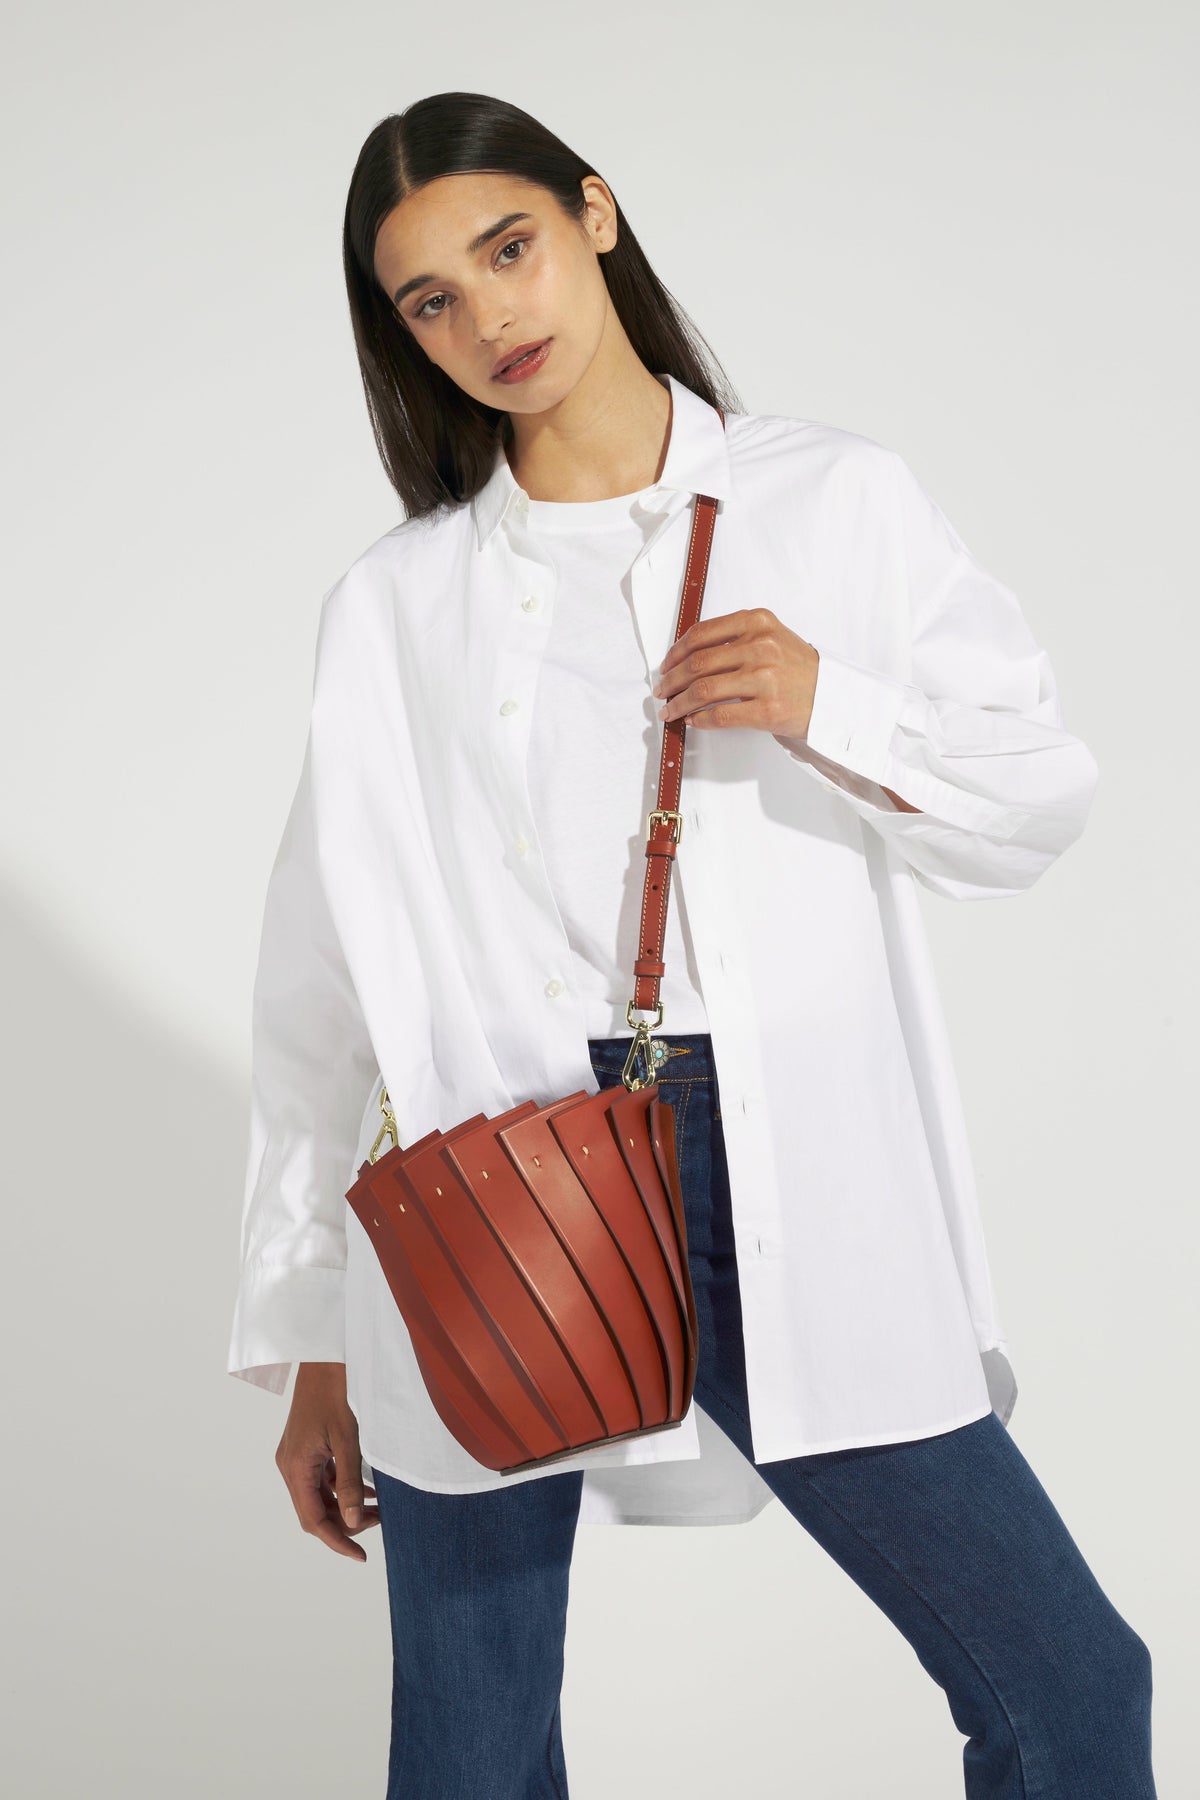 Designer Brands on Sale - Handbags, Accessories, Luxury Items